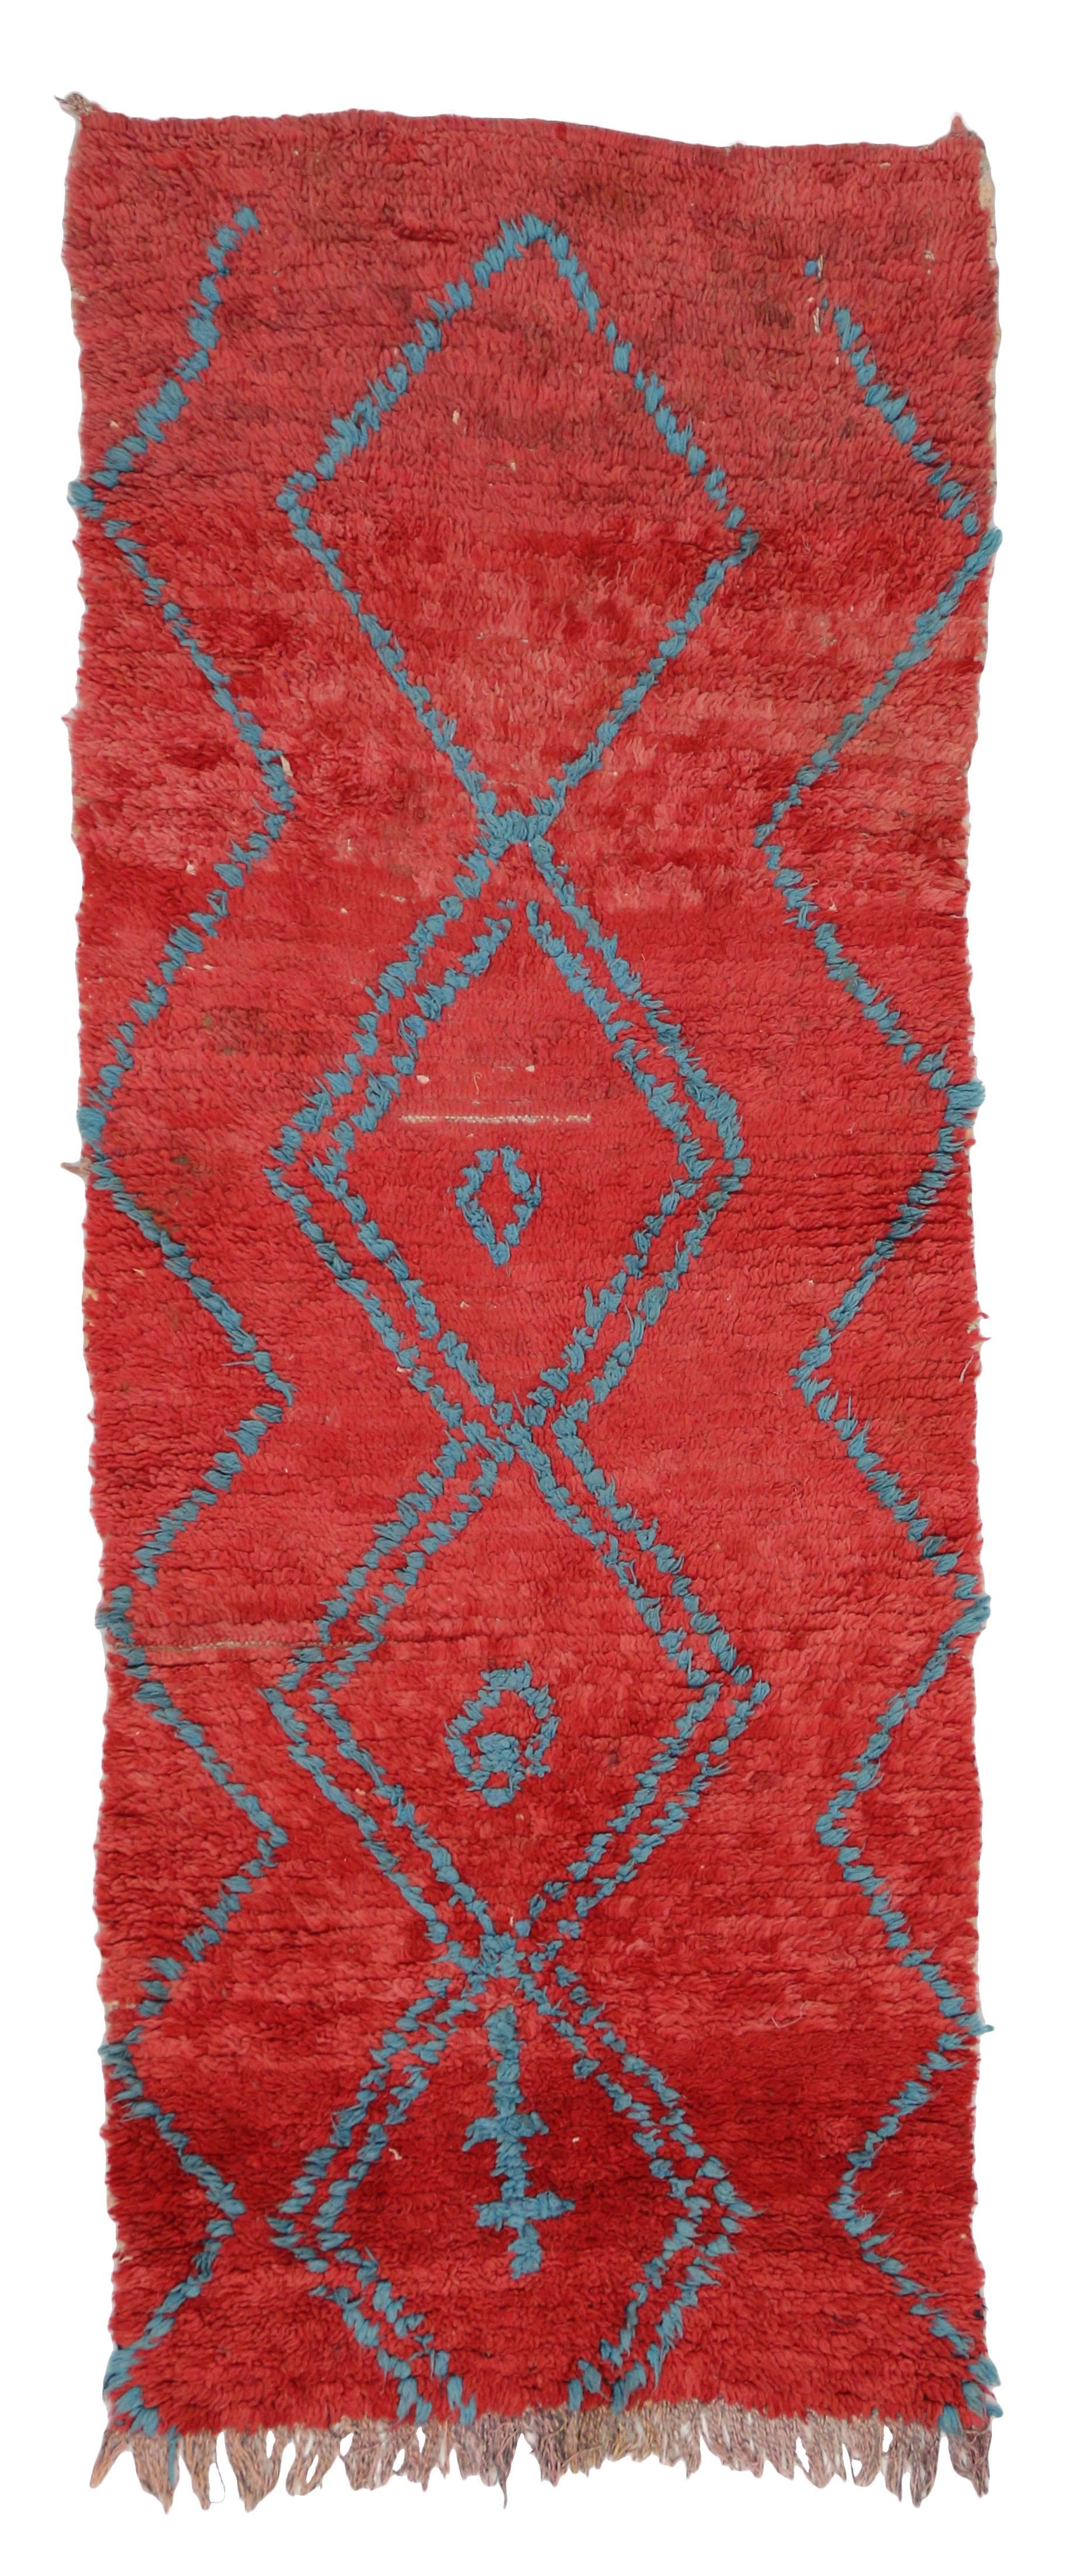 Wool Vintage Berber Moroccan Runner with Modern Tribal Design